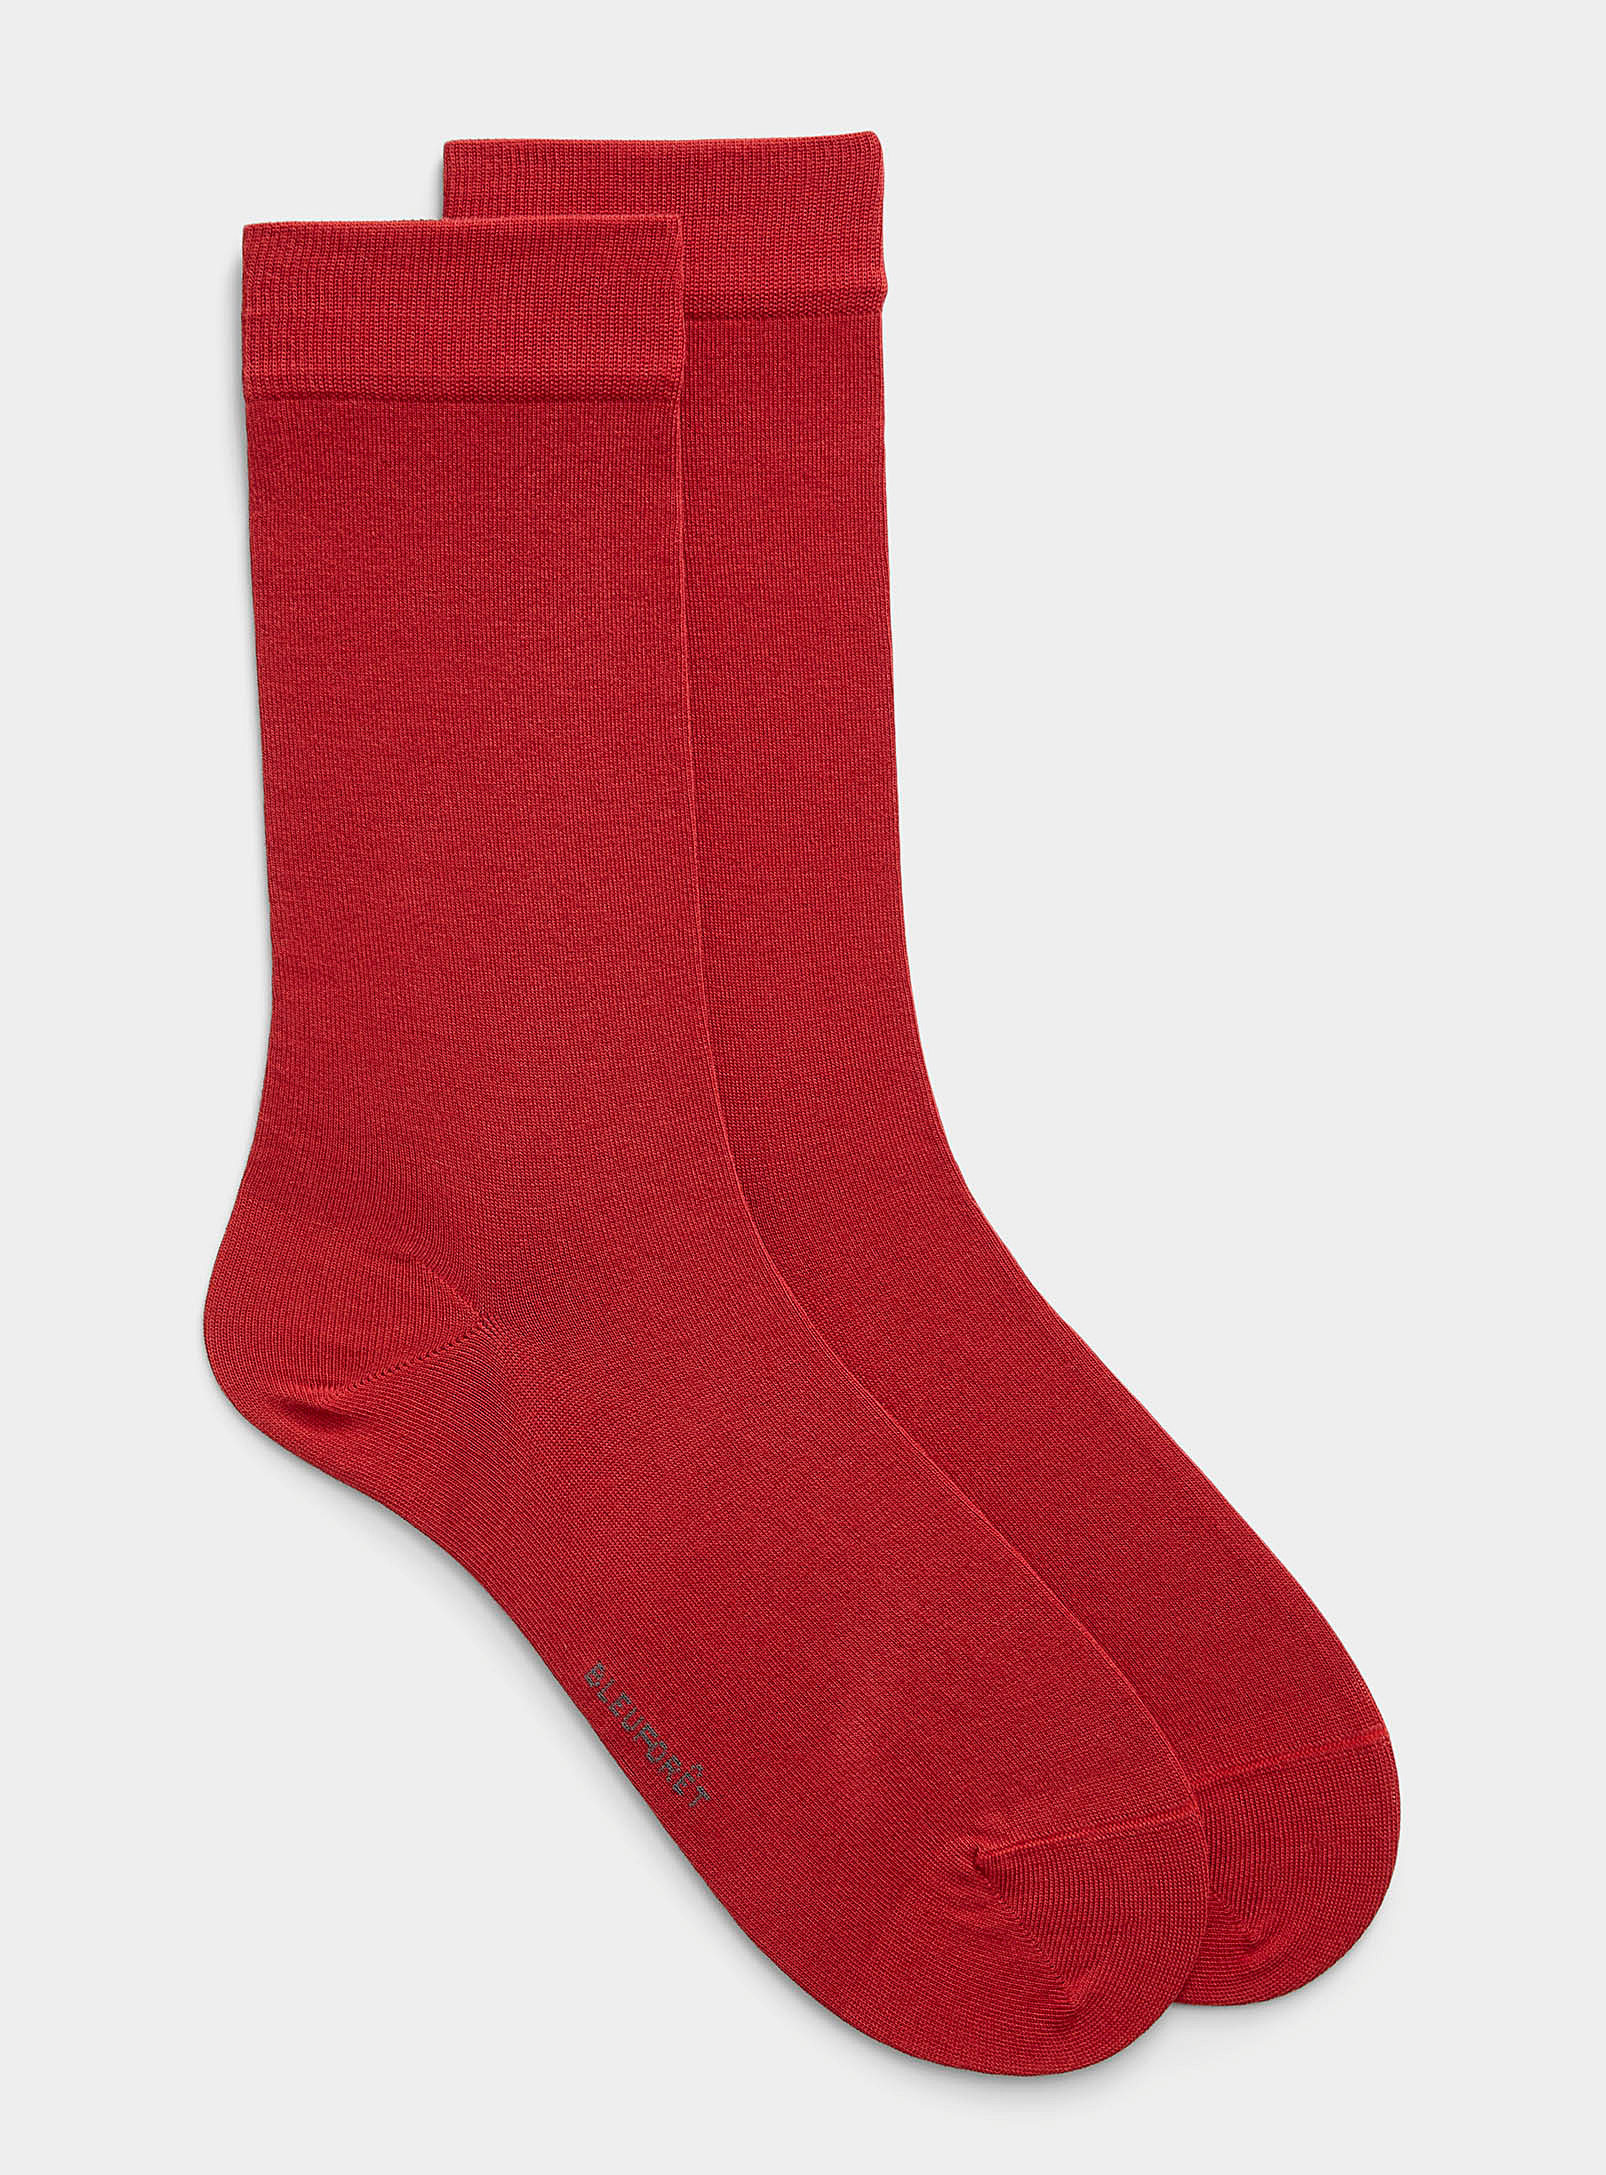 Bleuforêt Seamless Egyptian Cotton Socks In Red